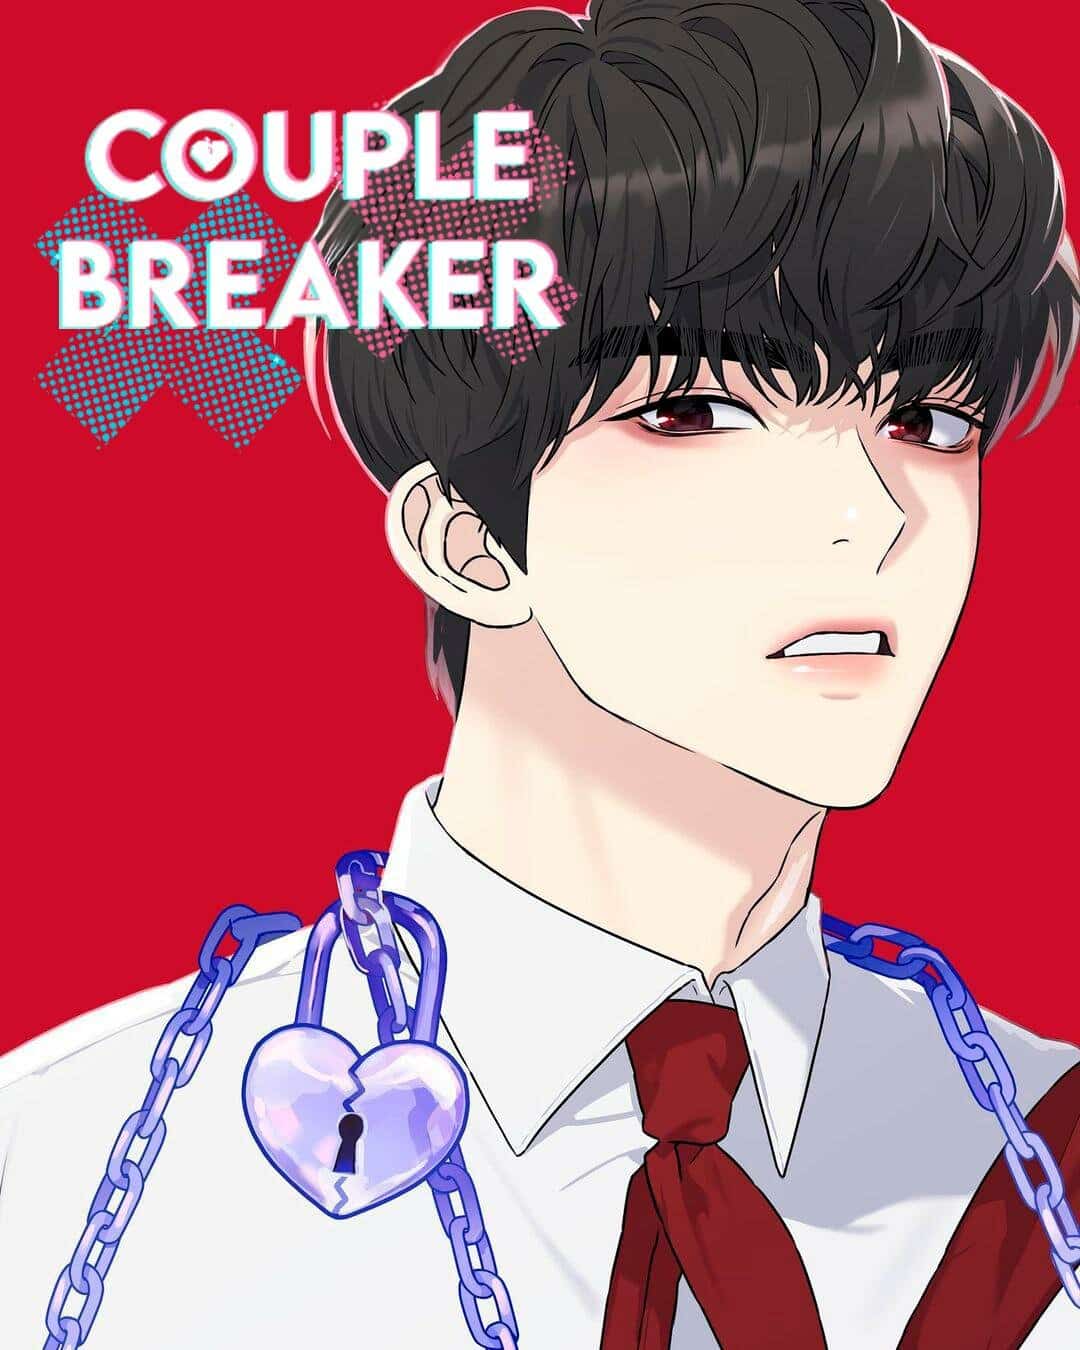 The Couple Breaker